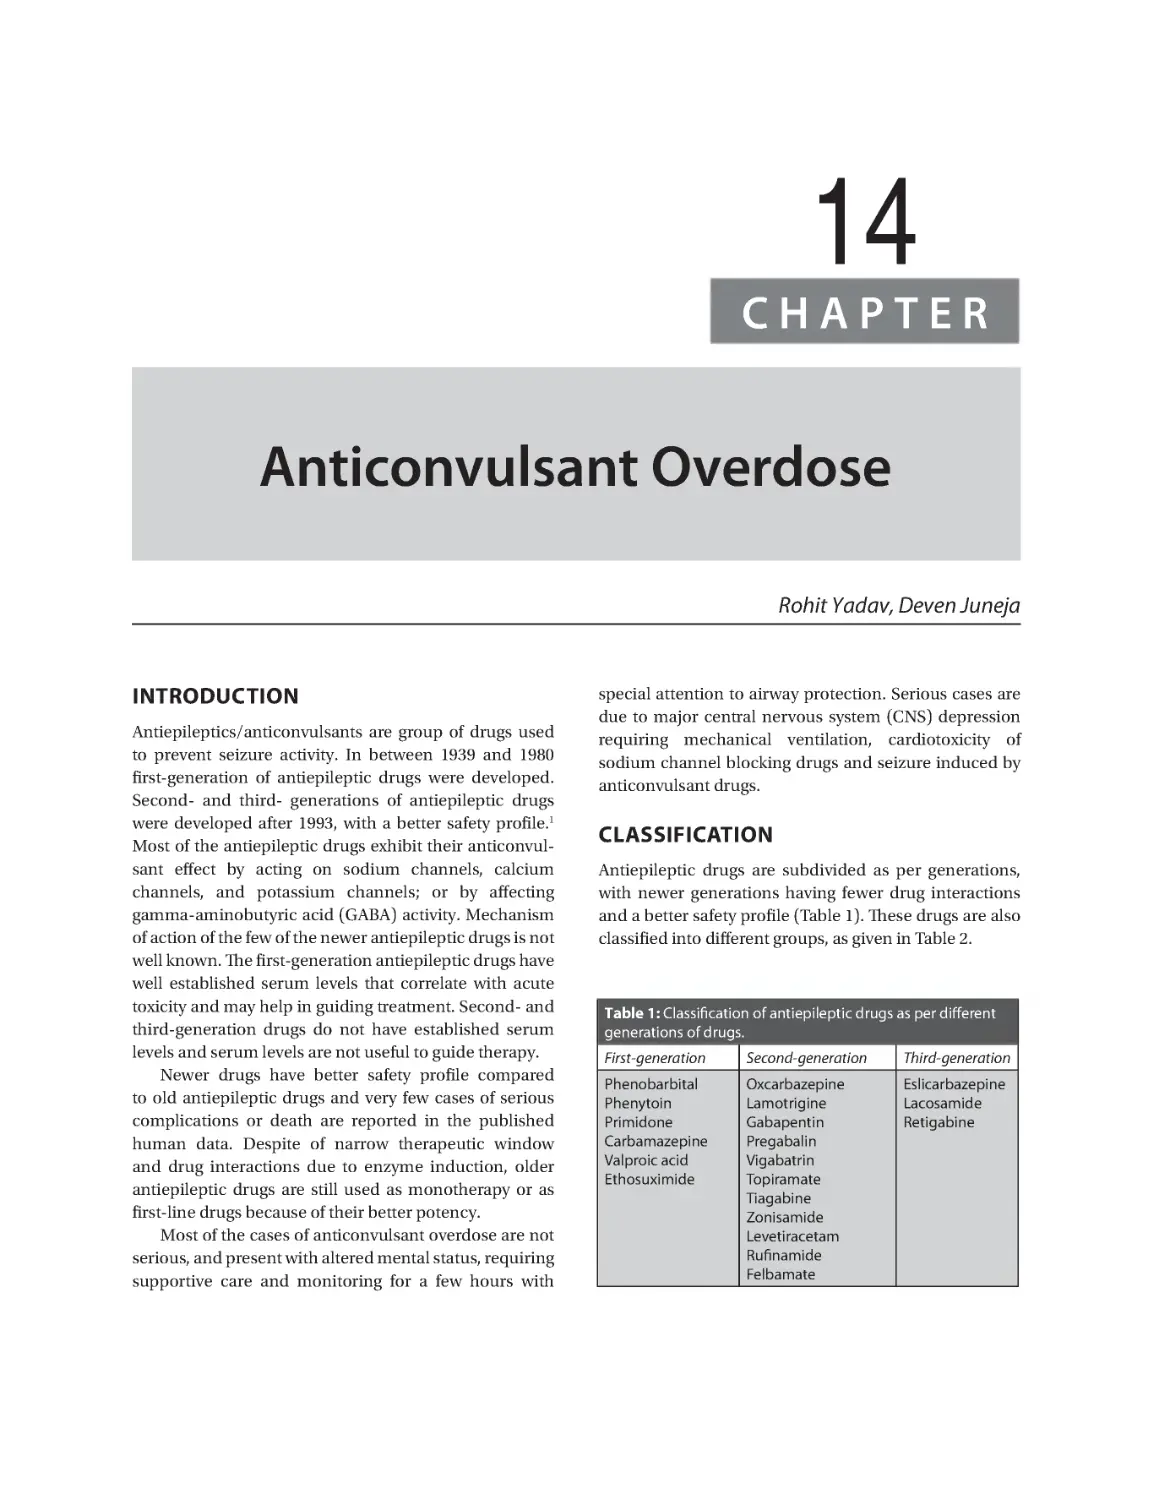 Chapter 14: Anticonvulsant Overdose